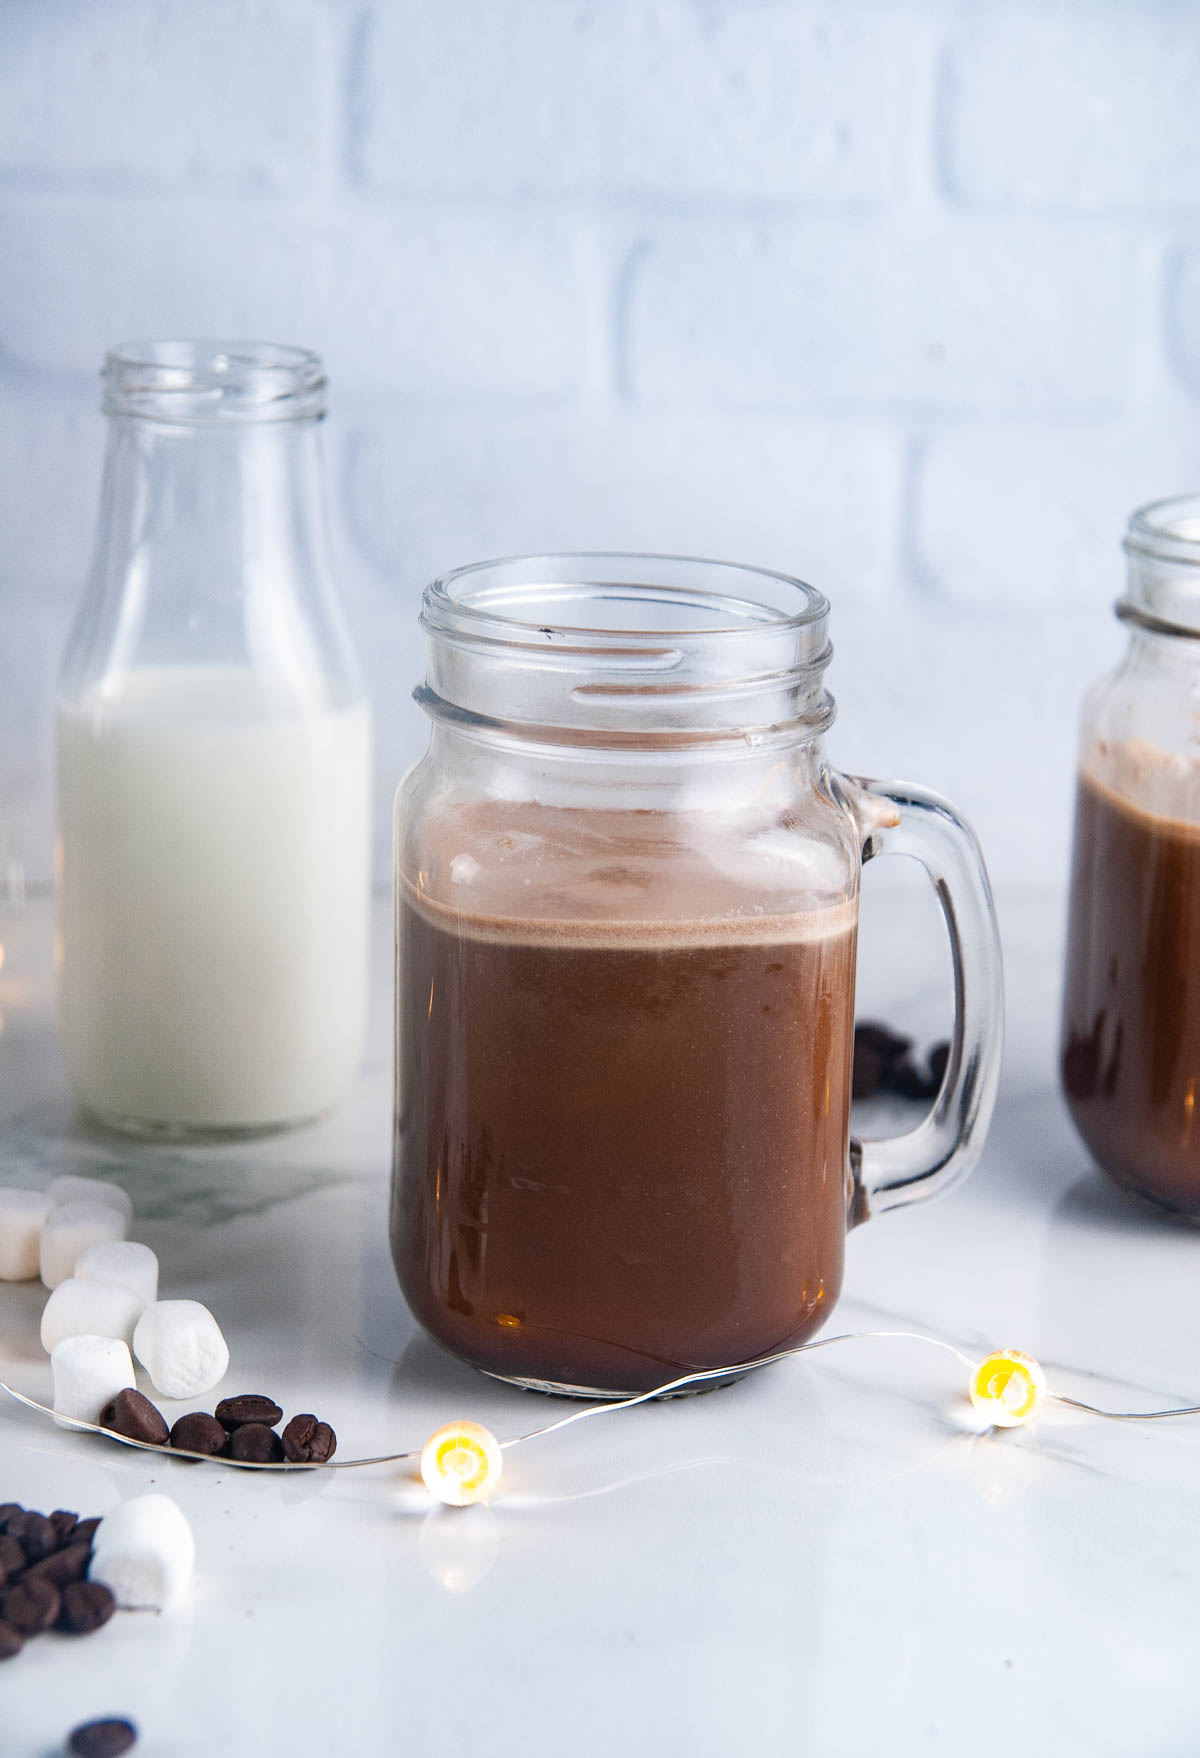 Add milk, half and half, or cream to make the hot chocolate coffee super creamy.